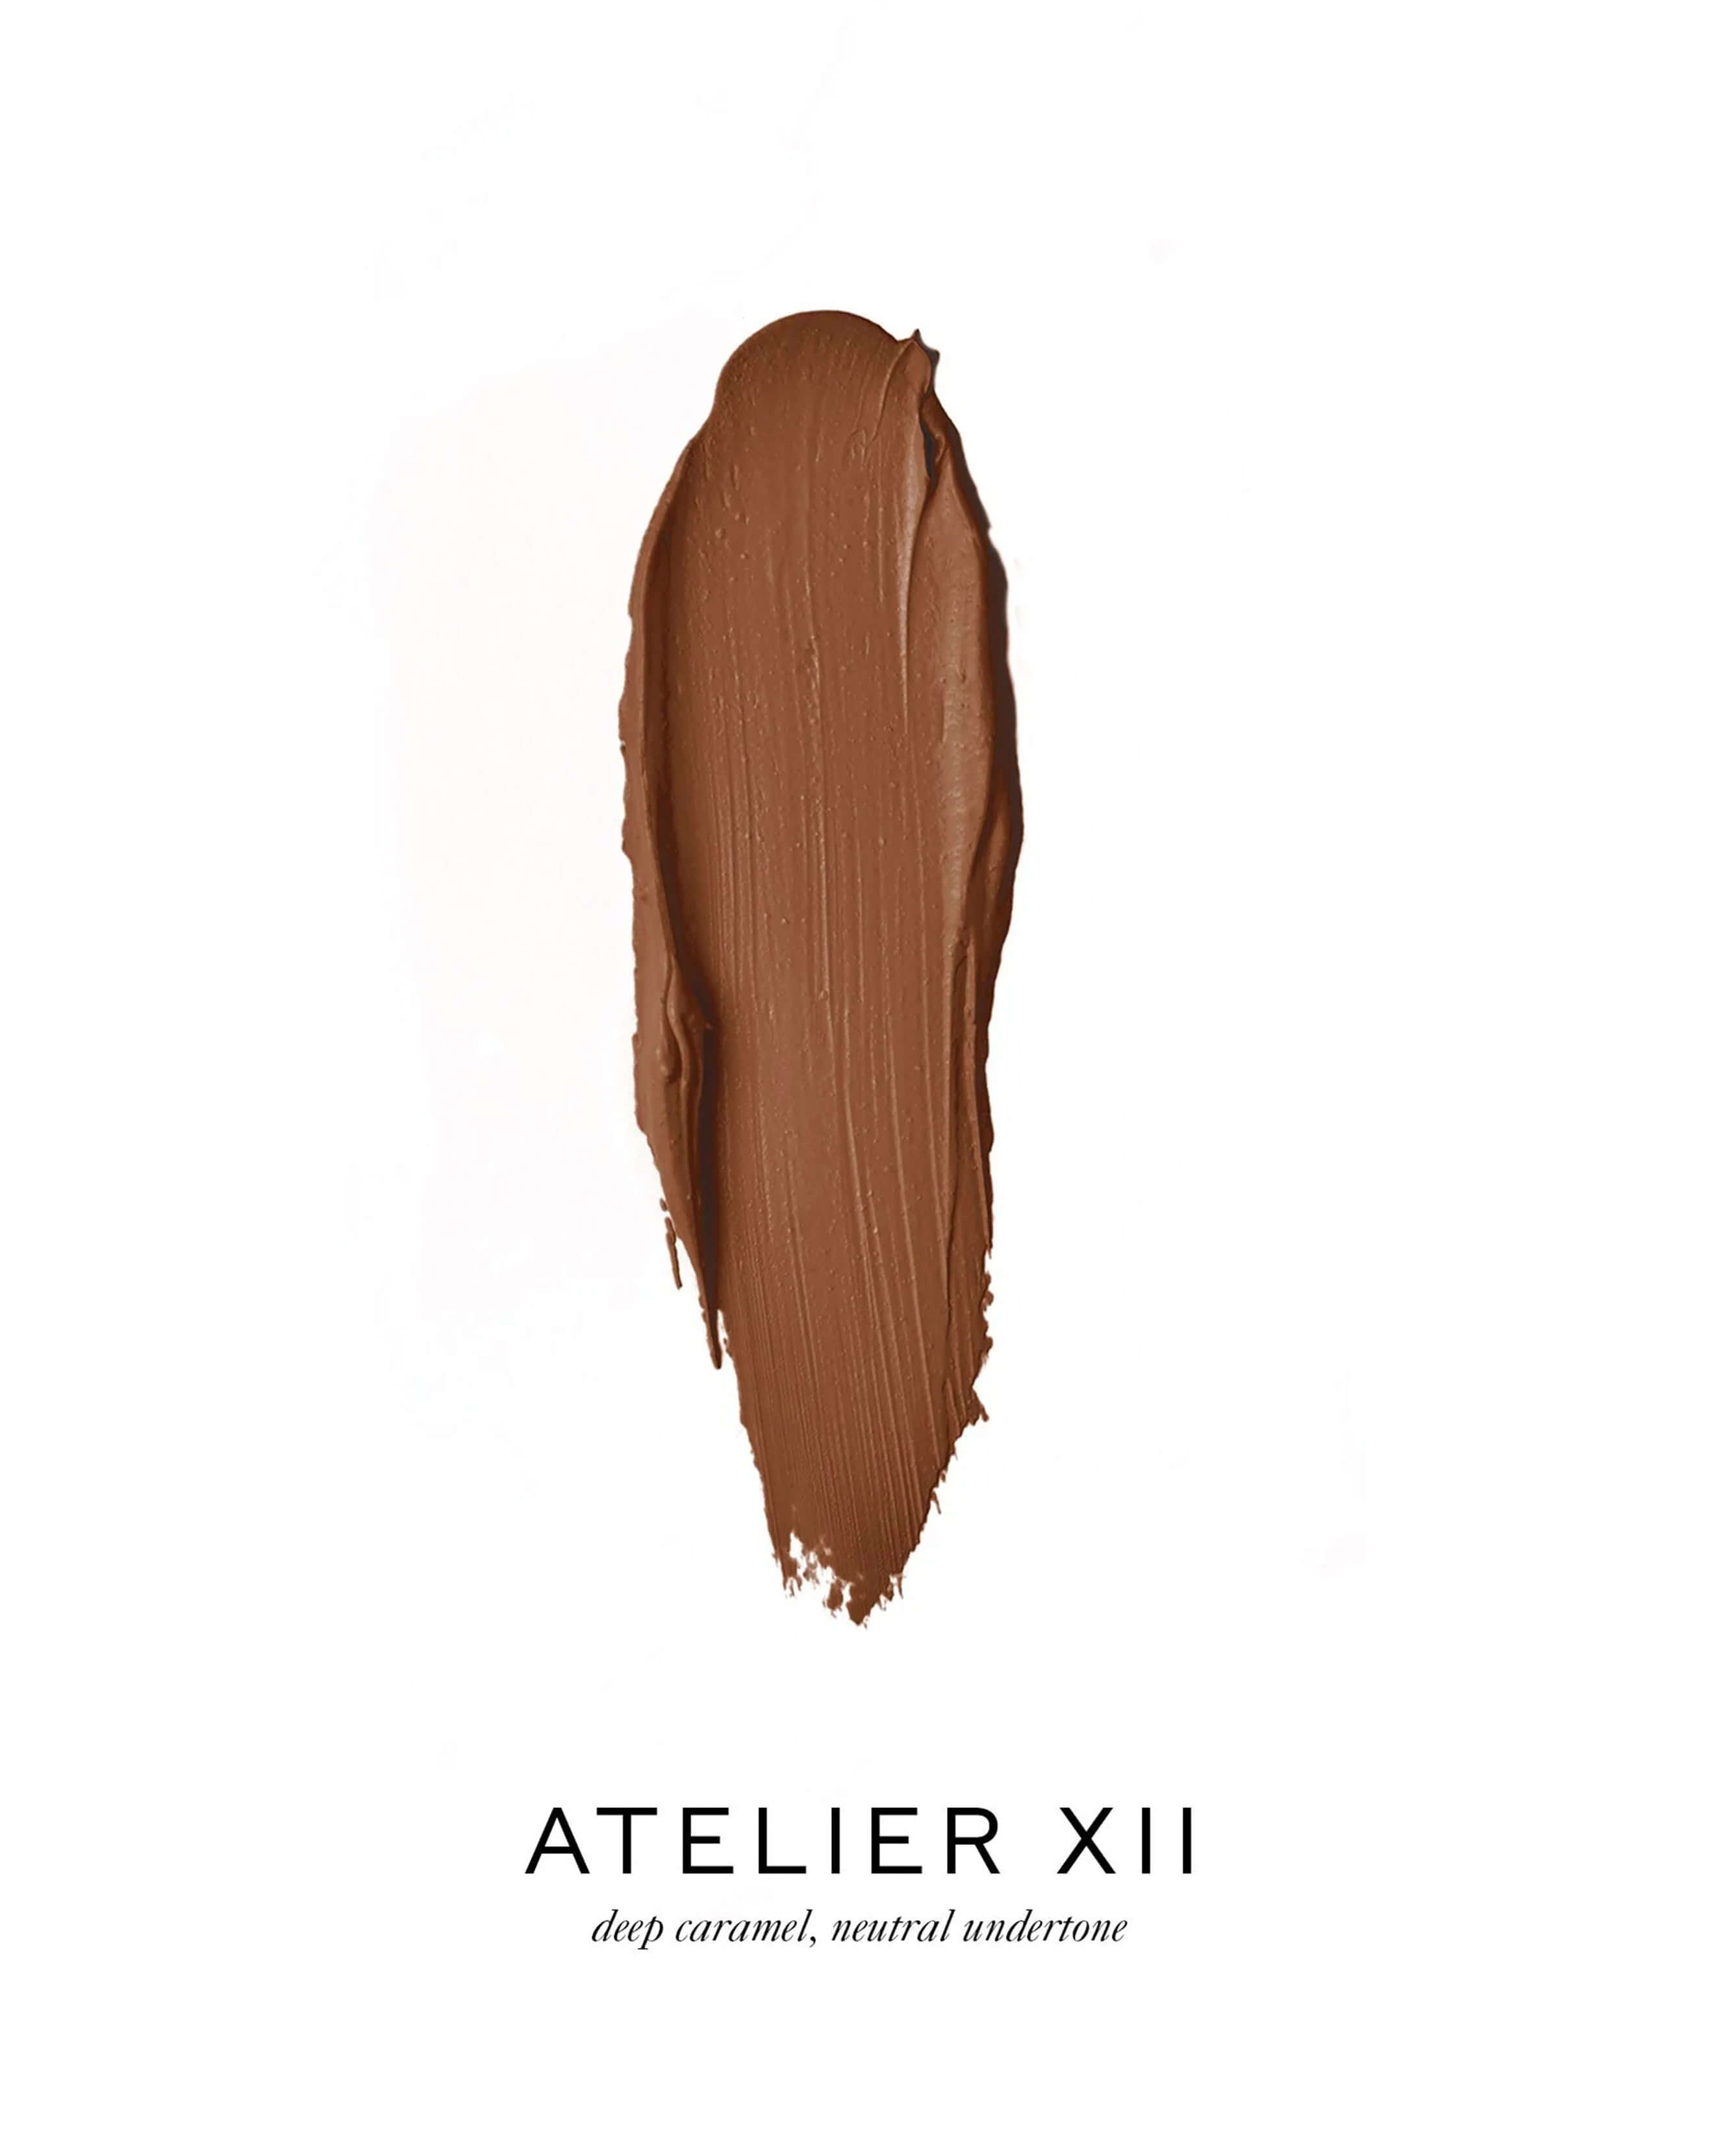 Atelier XII (deep caramel, neutral undertone)